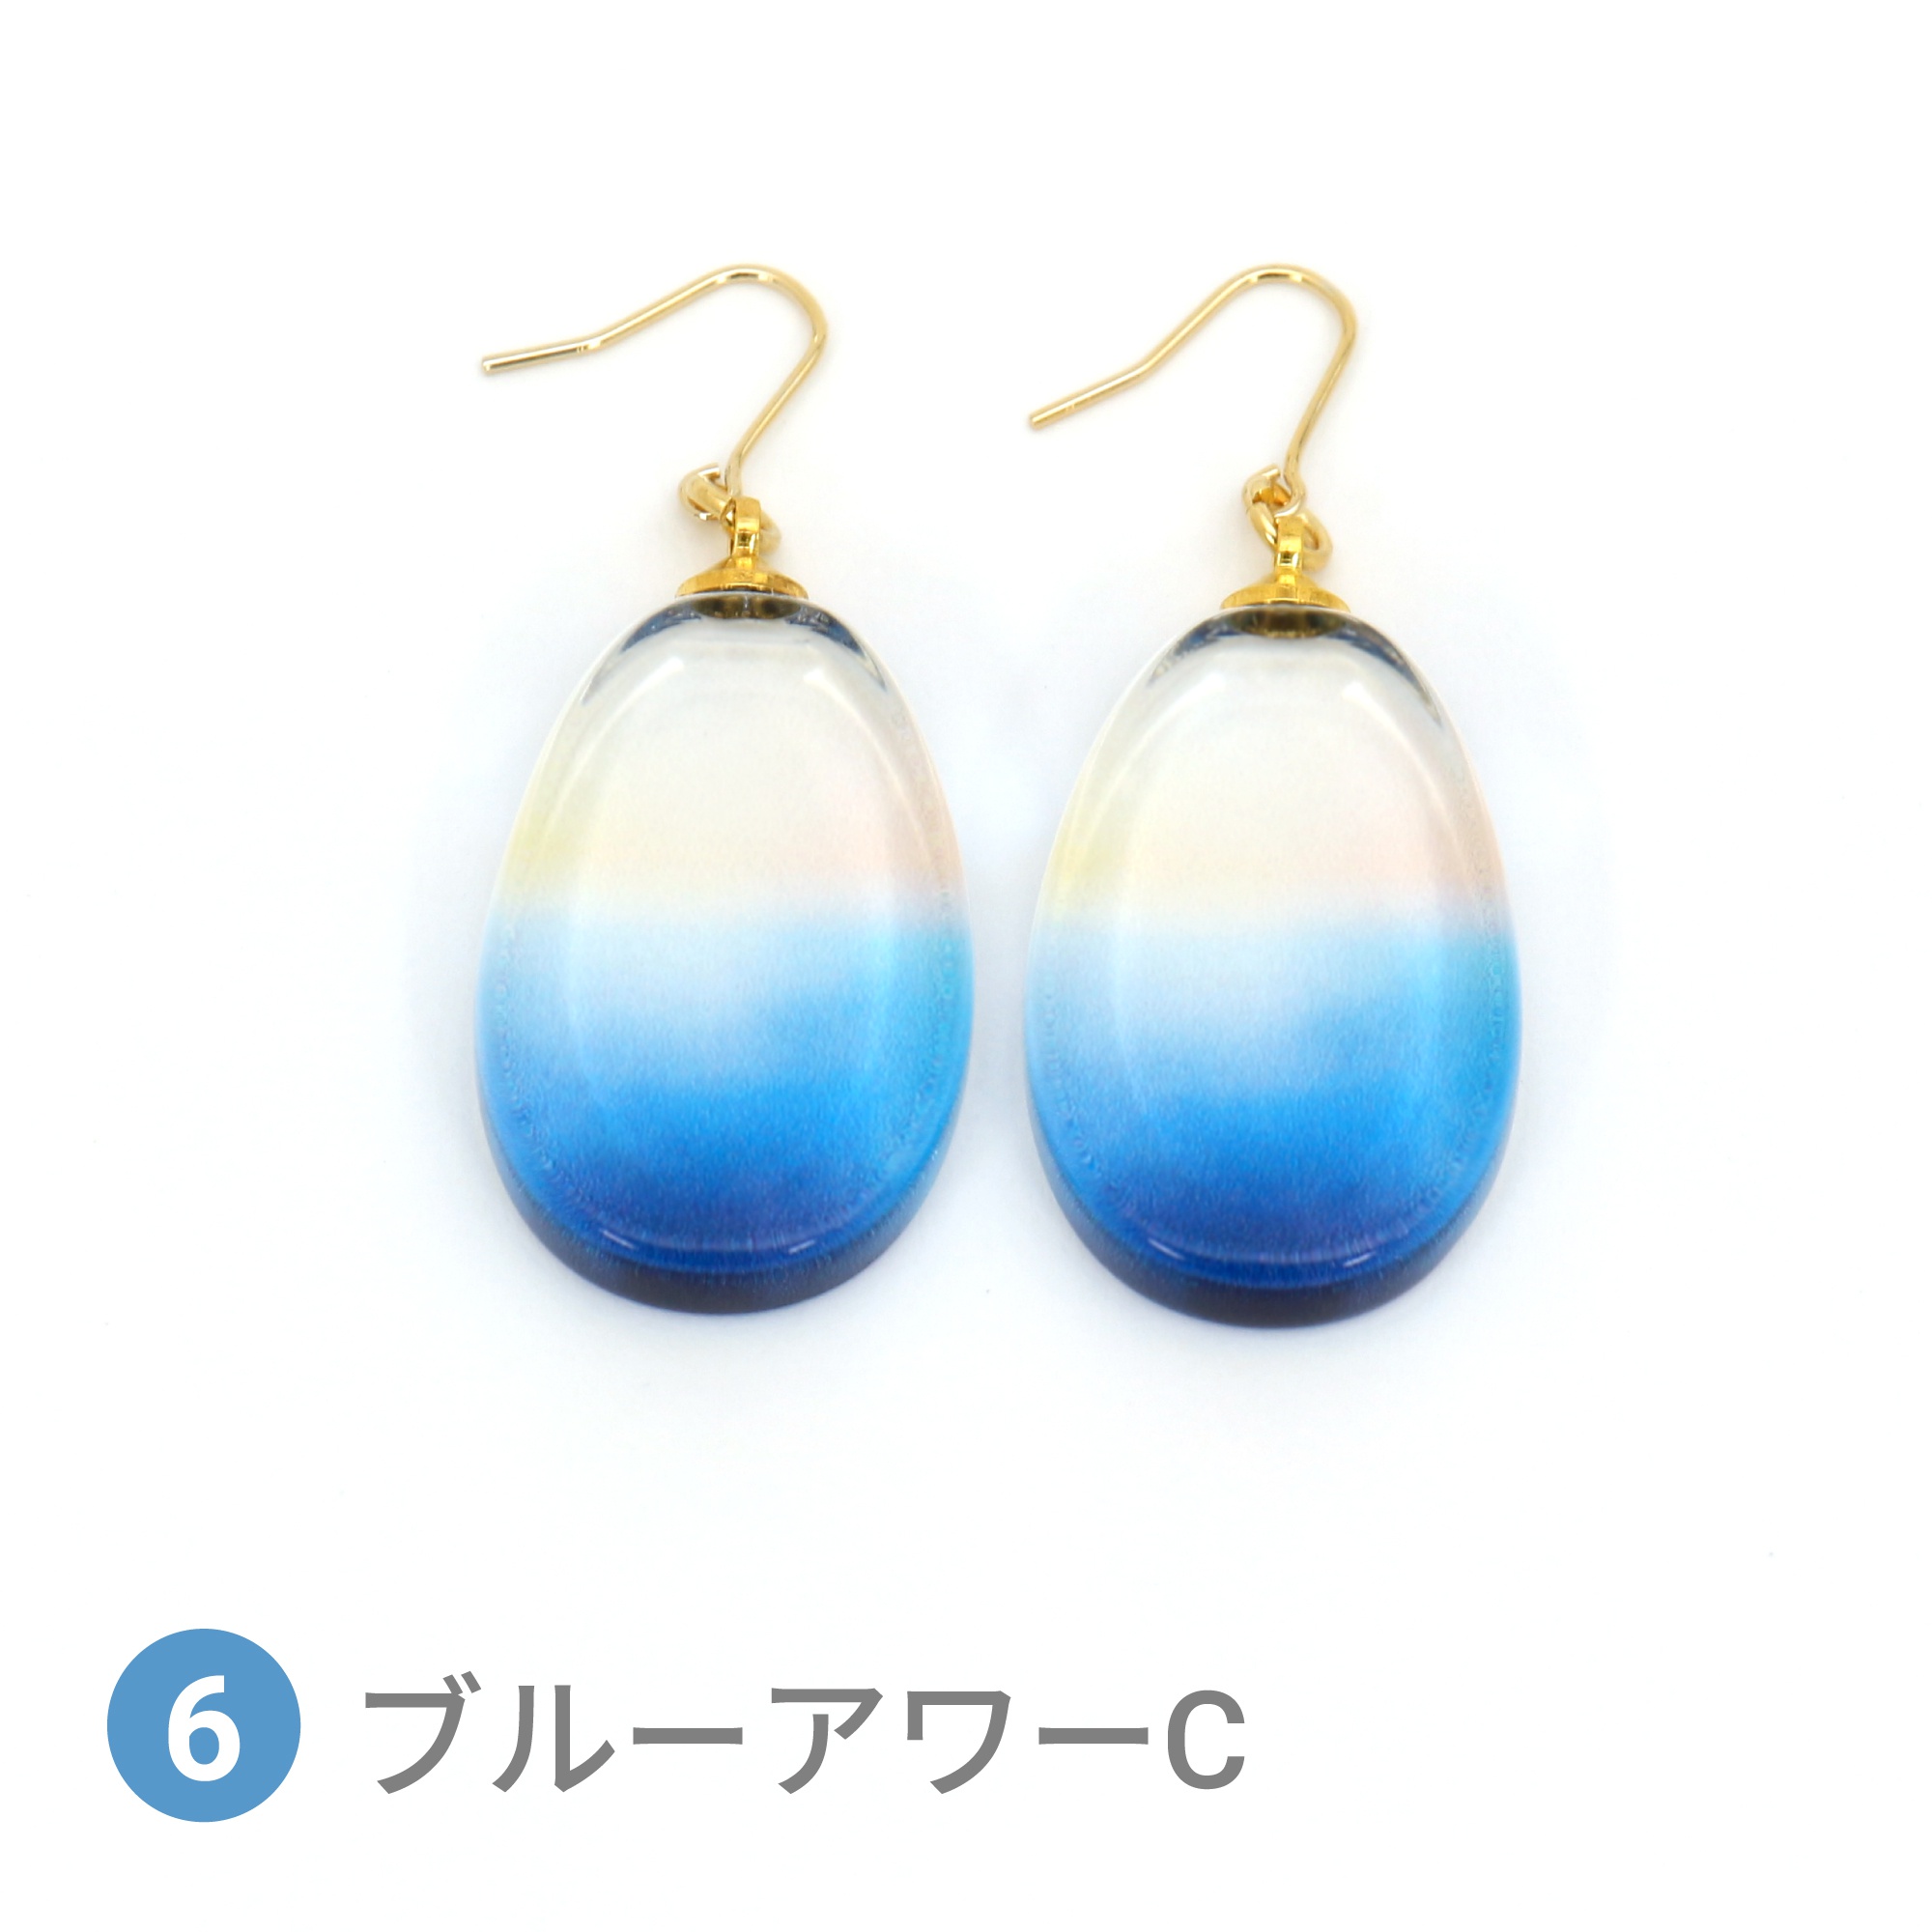 Glass accessories Pierced Earring SKY COLOR blue hour C drop shape